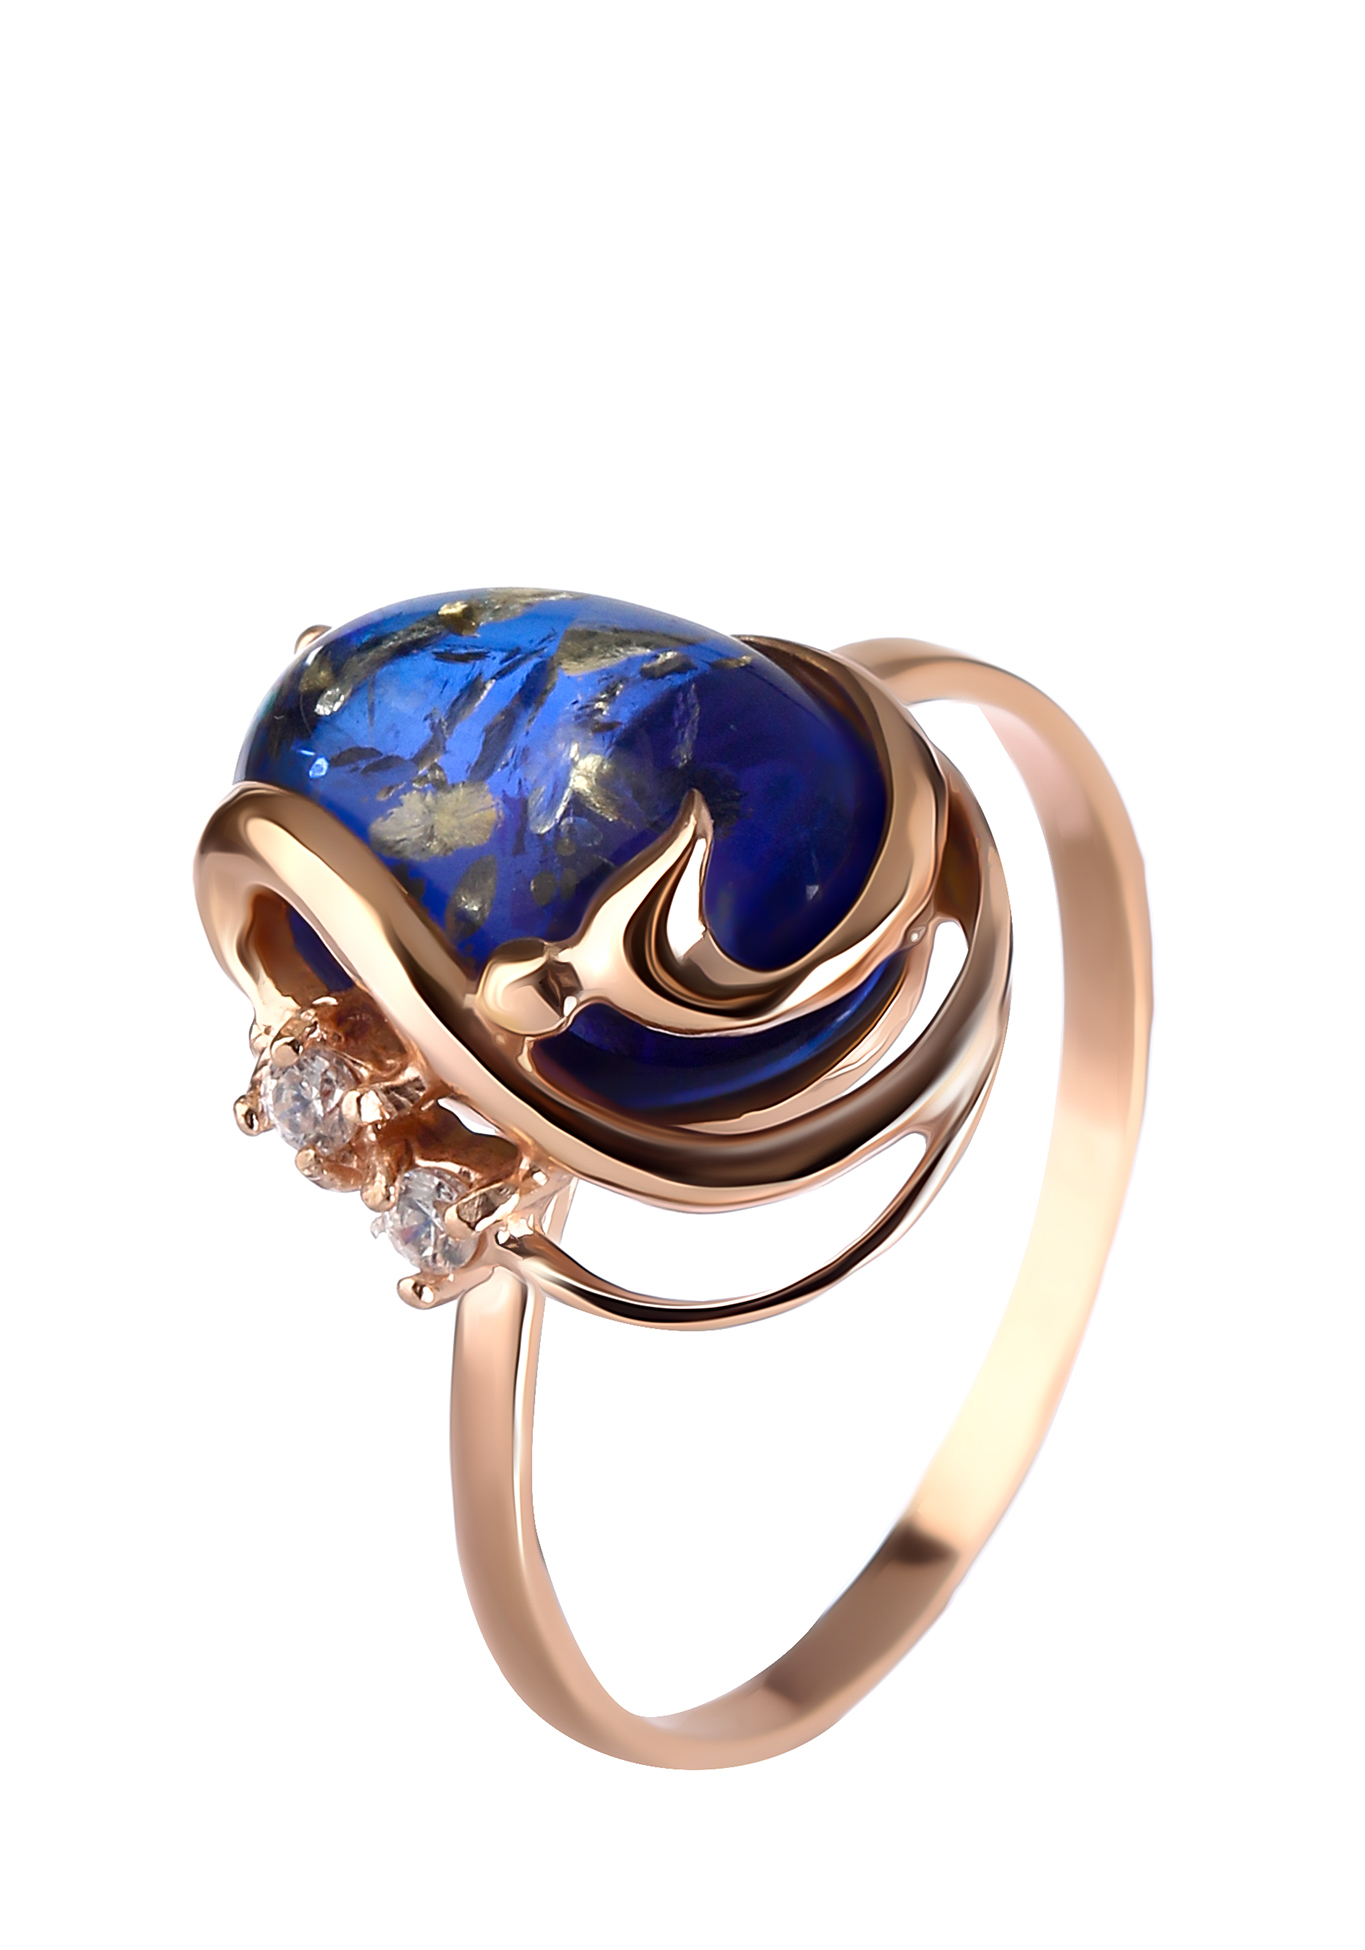 Серебряное кольцо "Синяя птица" Янтарная волна, цвет синий, размер 17 перстень - фото 1